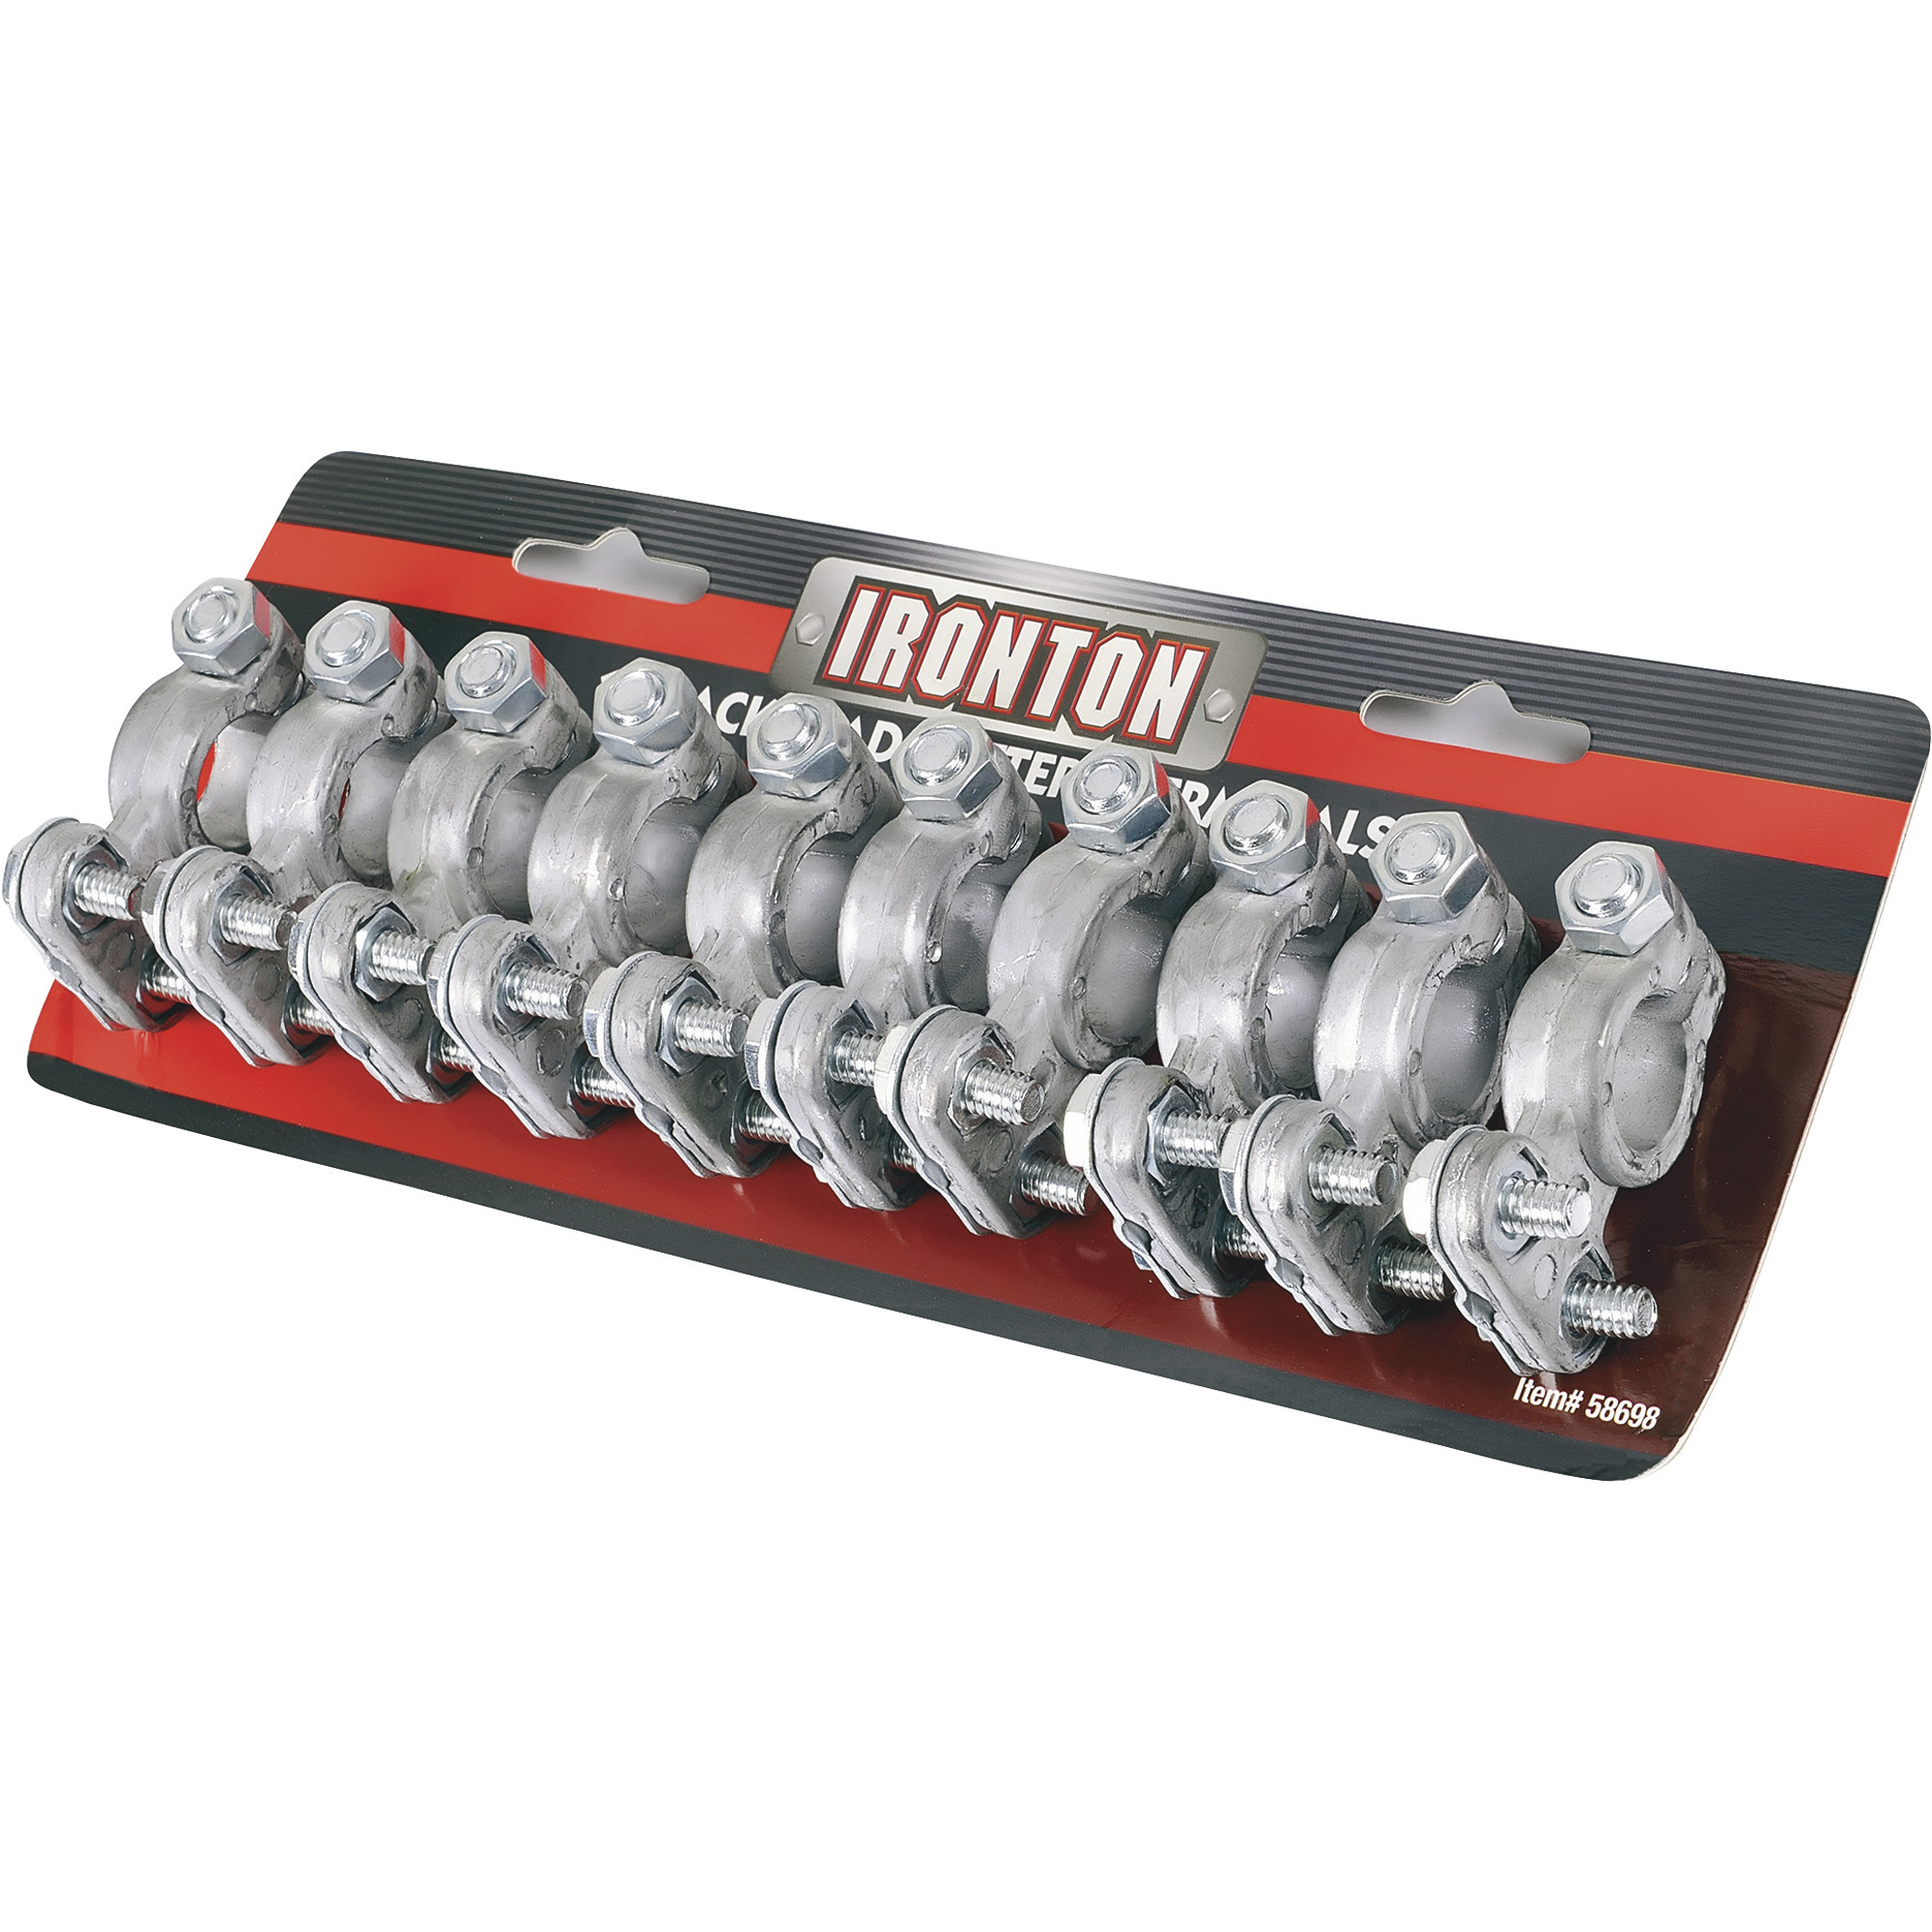 Ironton Lead Battery Terminals, 10-Piece Set